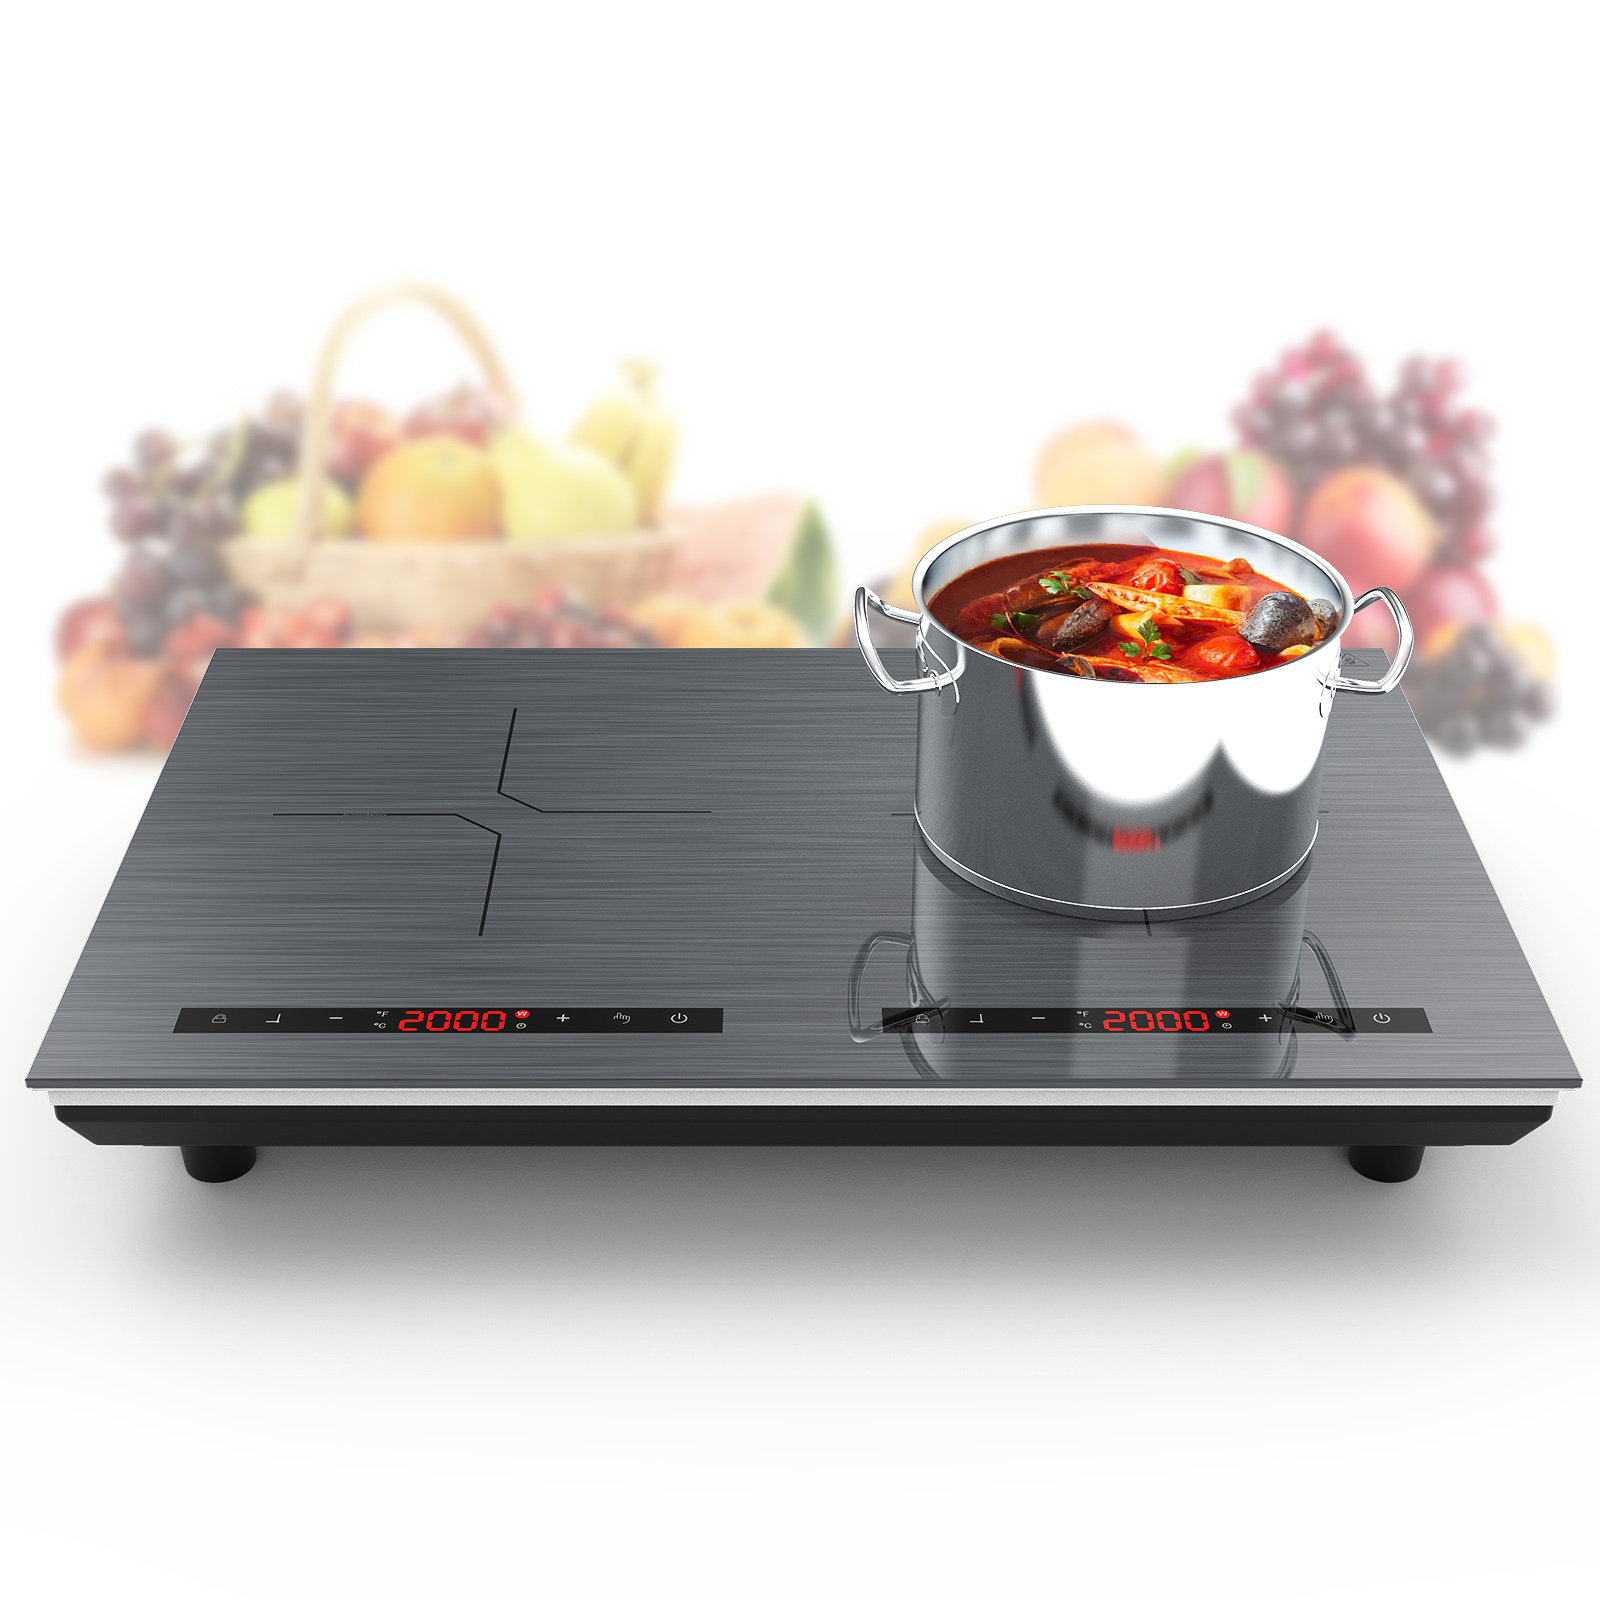 GTKZW Dual Burner Electric Cooktop Review - Modern, Sleek Design and Very  Functional! 